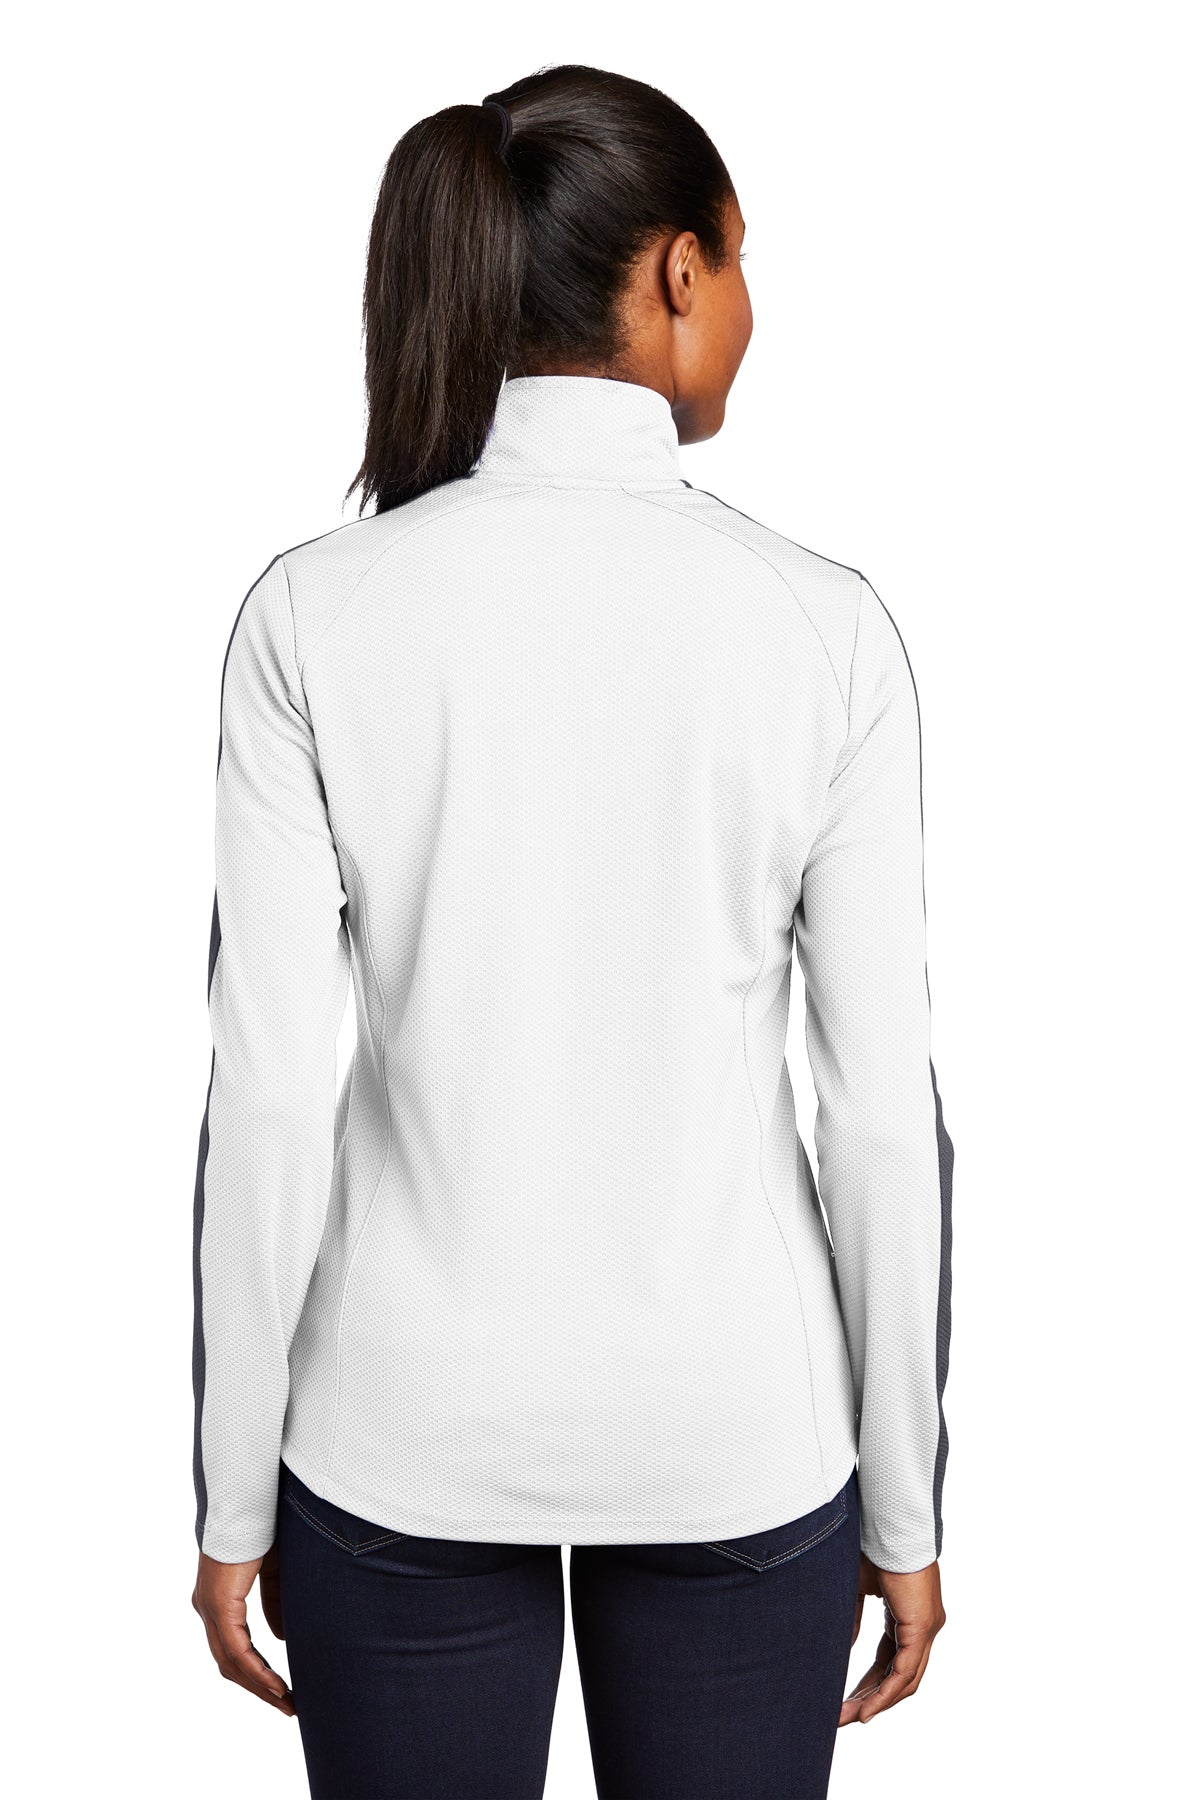 sport-tek_lst861 _white/ iron grey_company_logo_sweatshirts